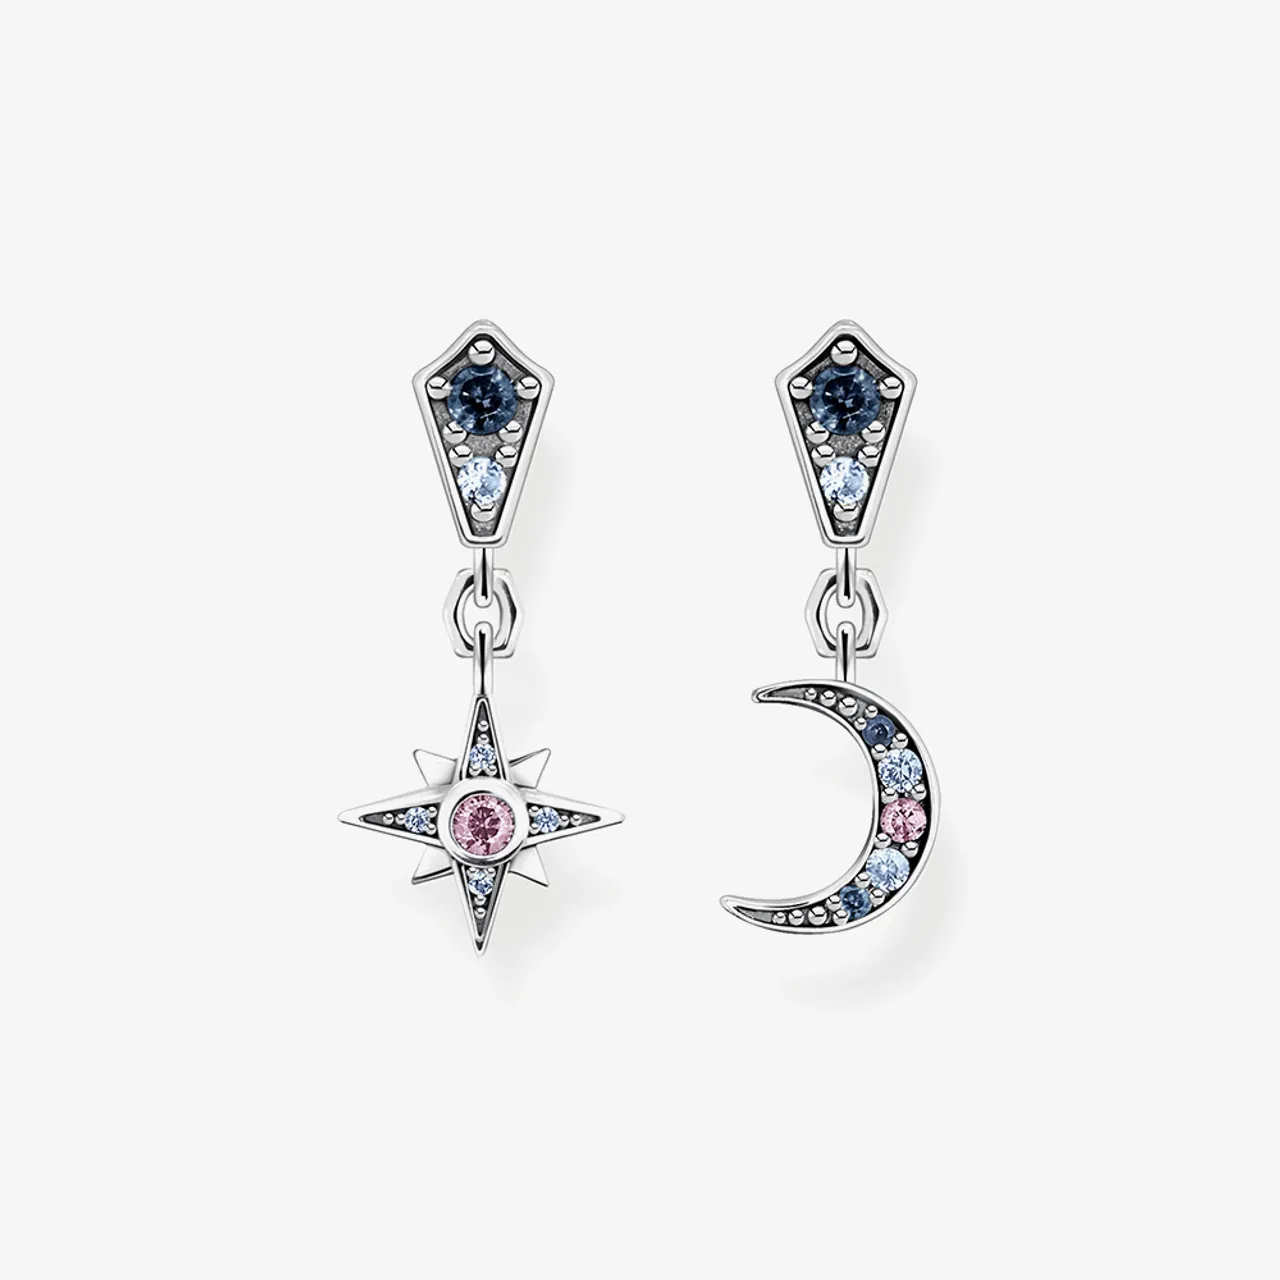 THOMAS SABO Silver Moon & Star Dropper Earrings H2207-945-7